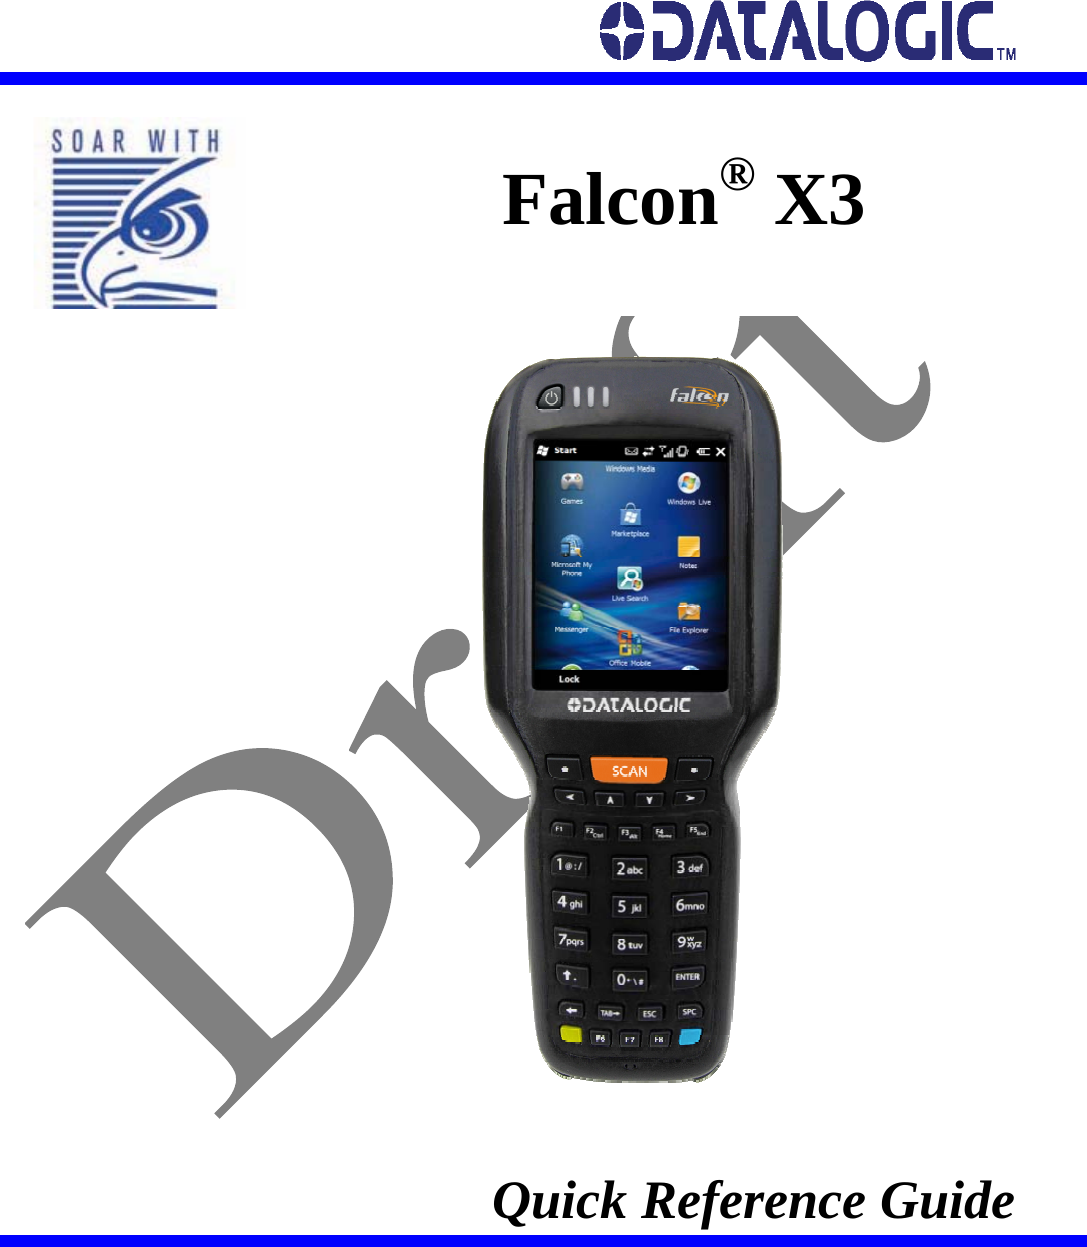                                Quick Reference Guide      Falcon® X3 